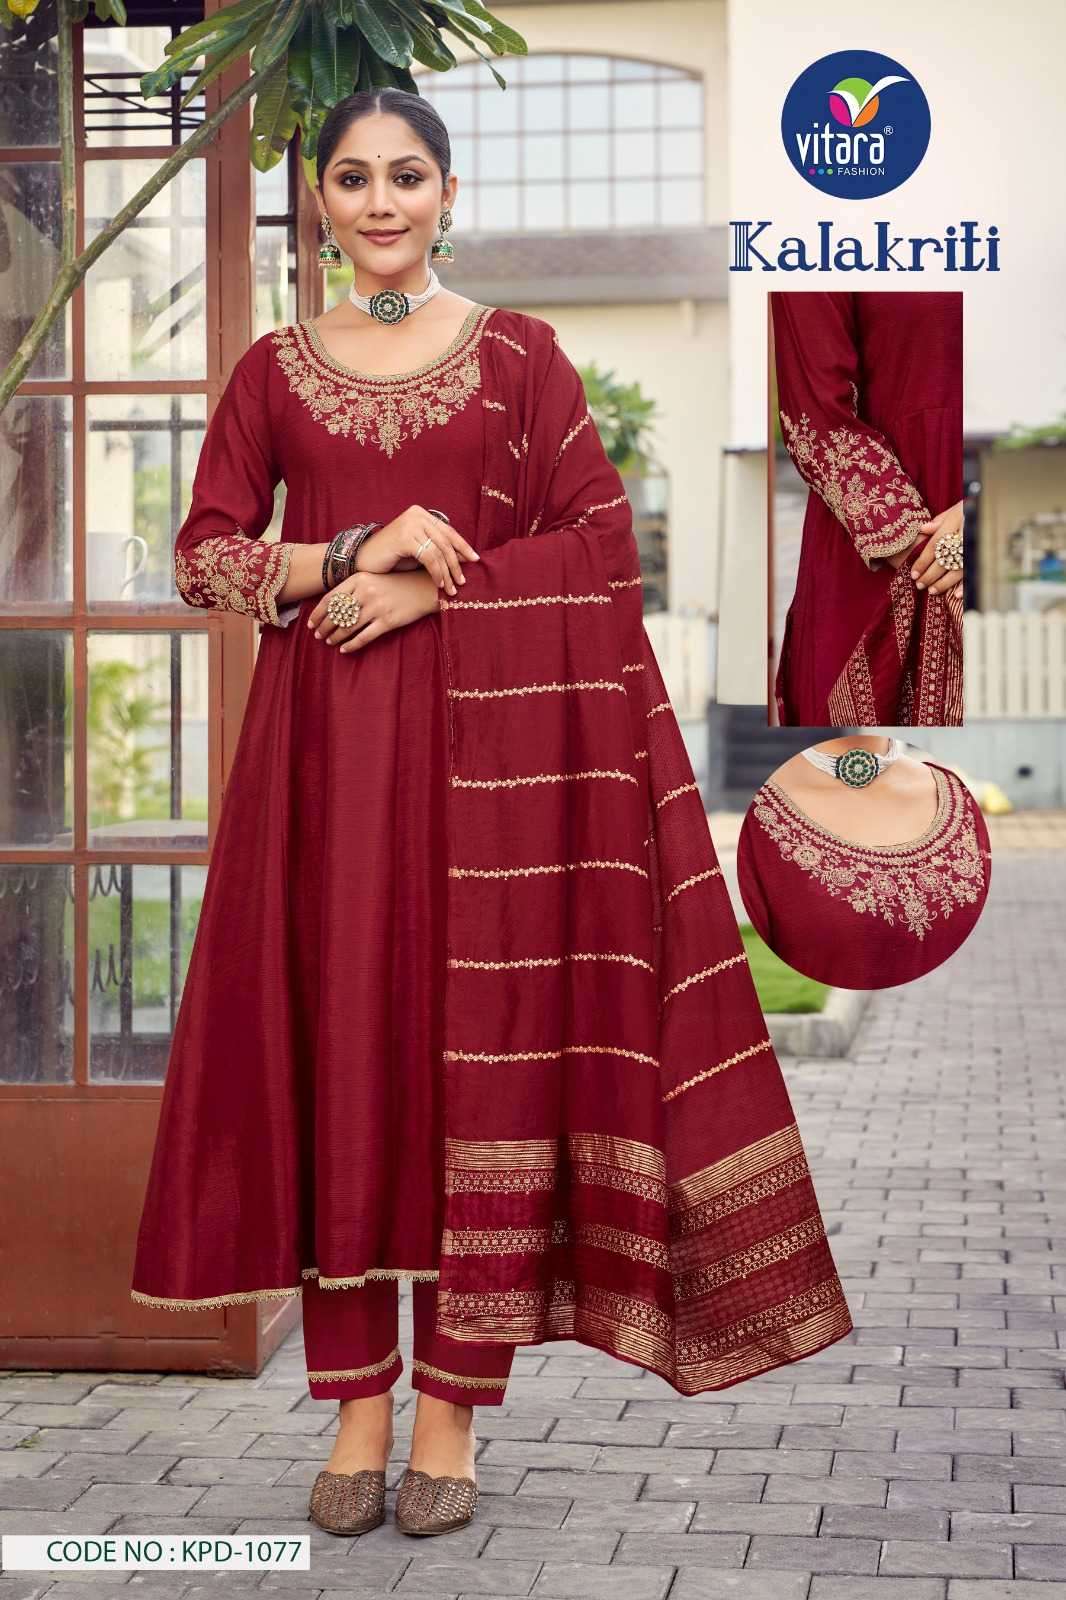 vitara fashion kalakriti series 1076-1079 poly chinon suit